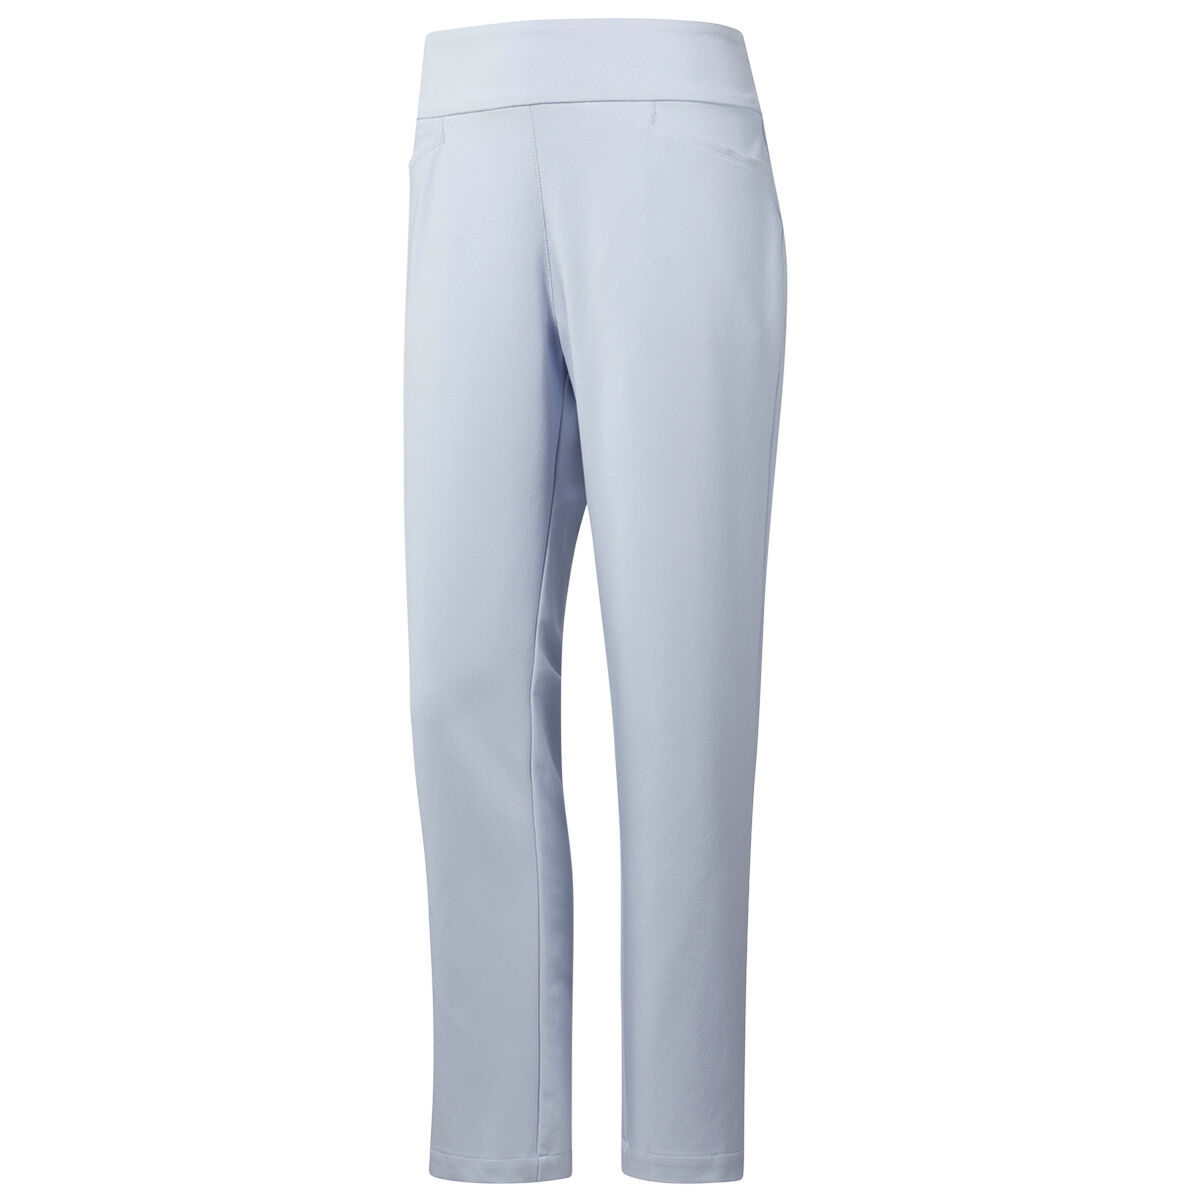 Pantalon adidas Golf Ultimate Woven pour femmes, femme, Aero blue, Moyen | Online Golf